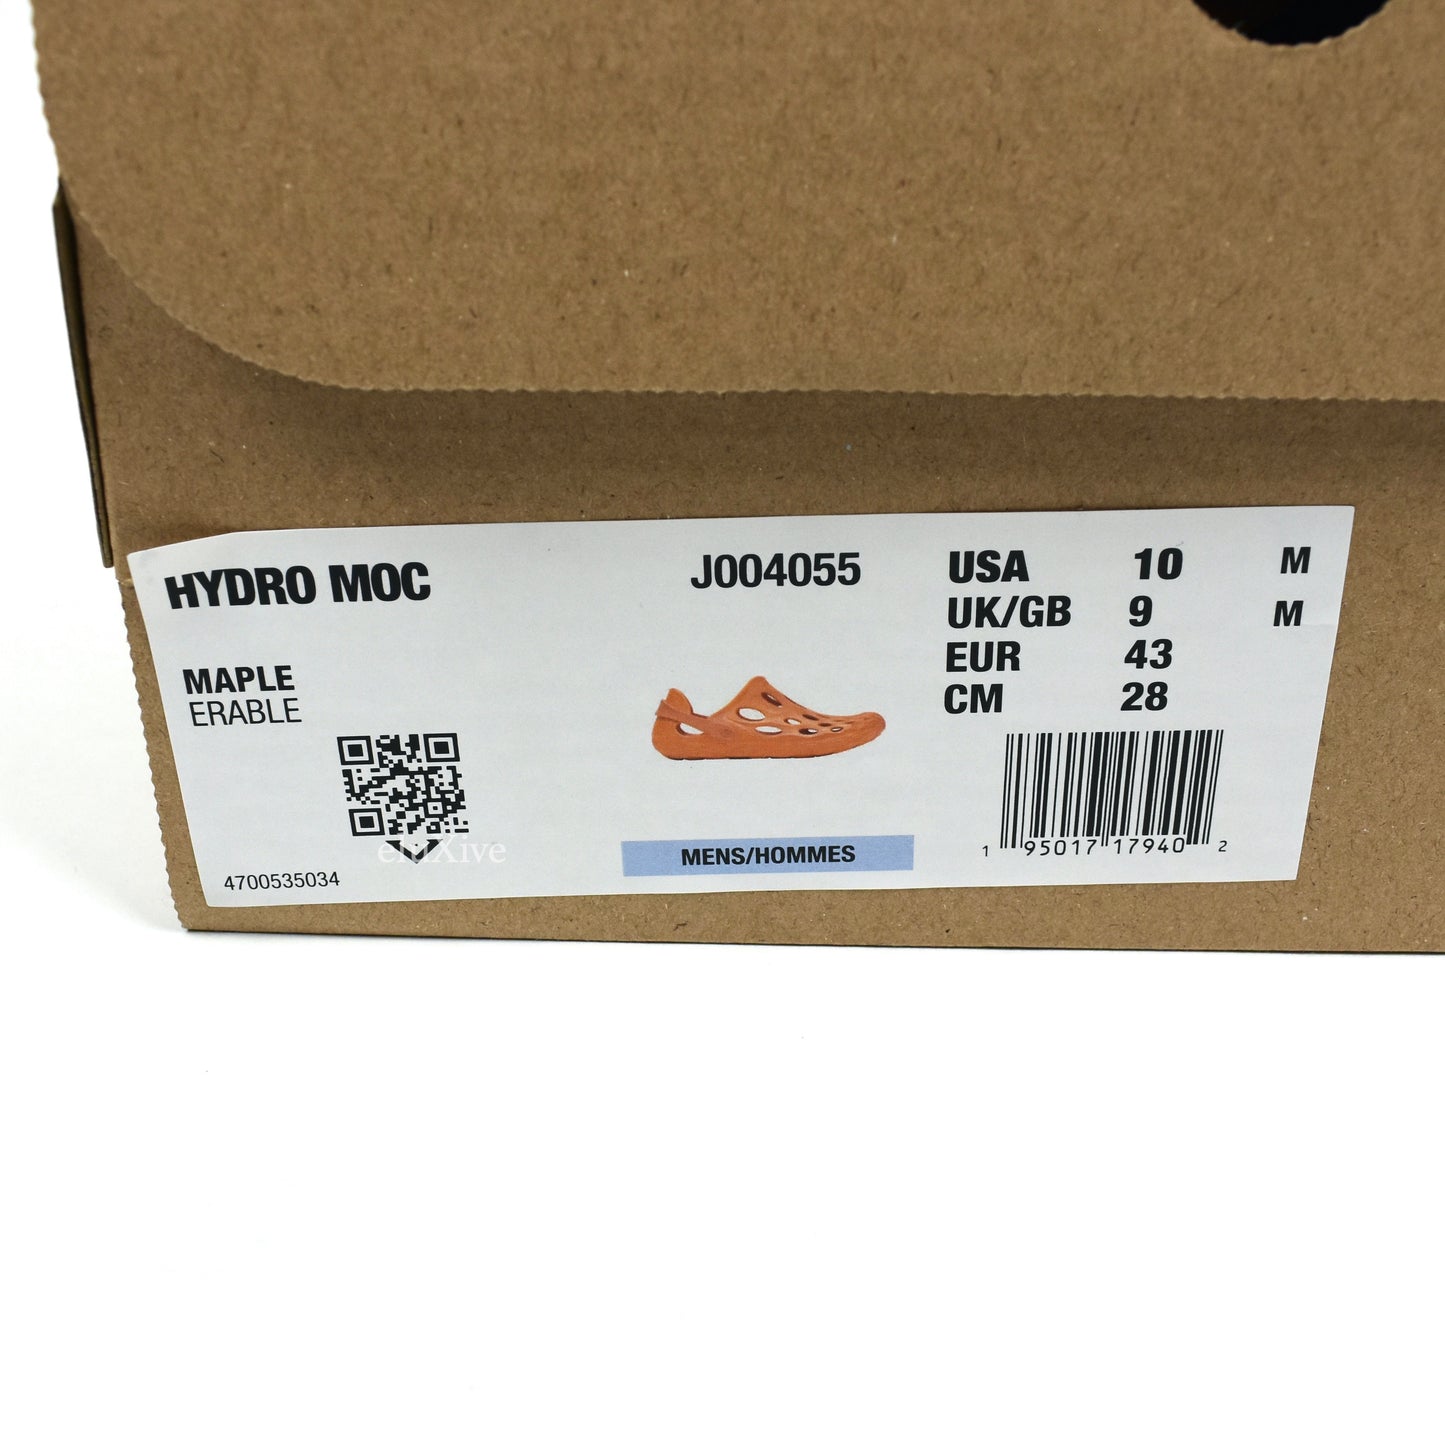 Merrell - Hydro Moc Water Shoes / Clogs (Orange Swirl)